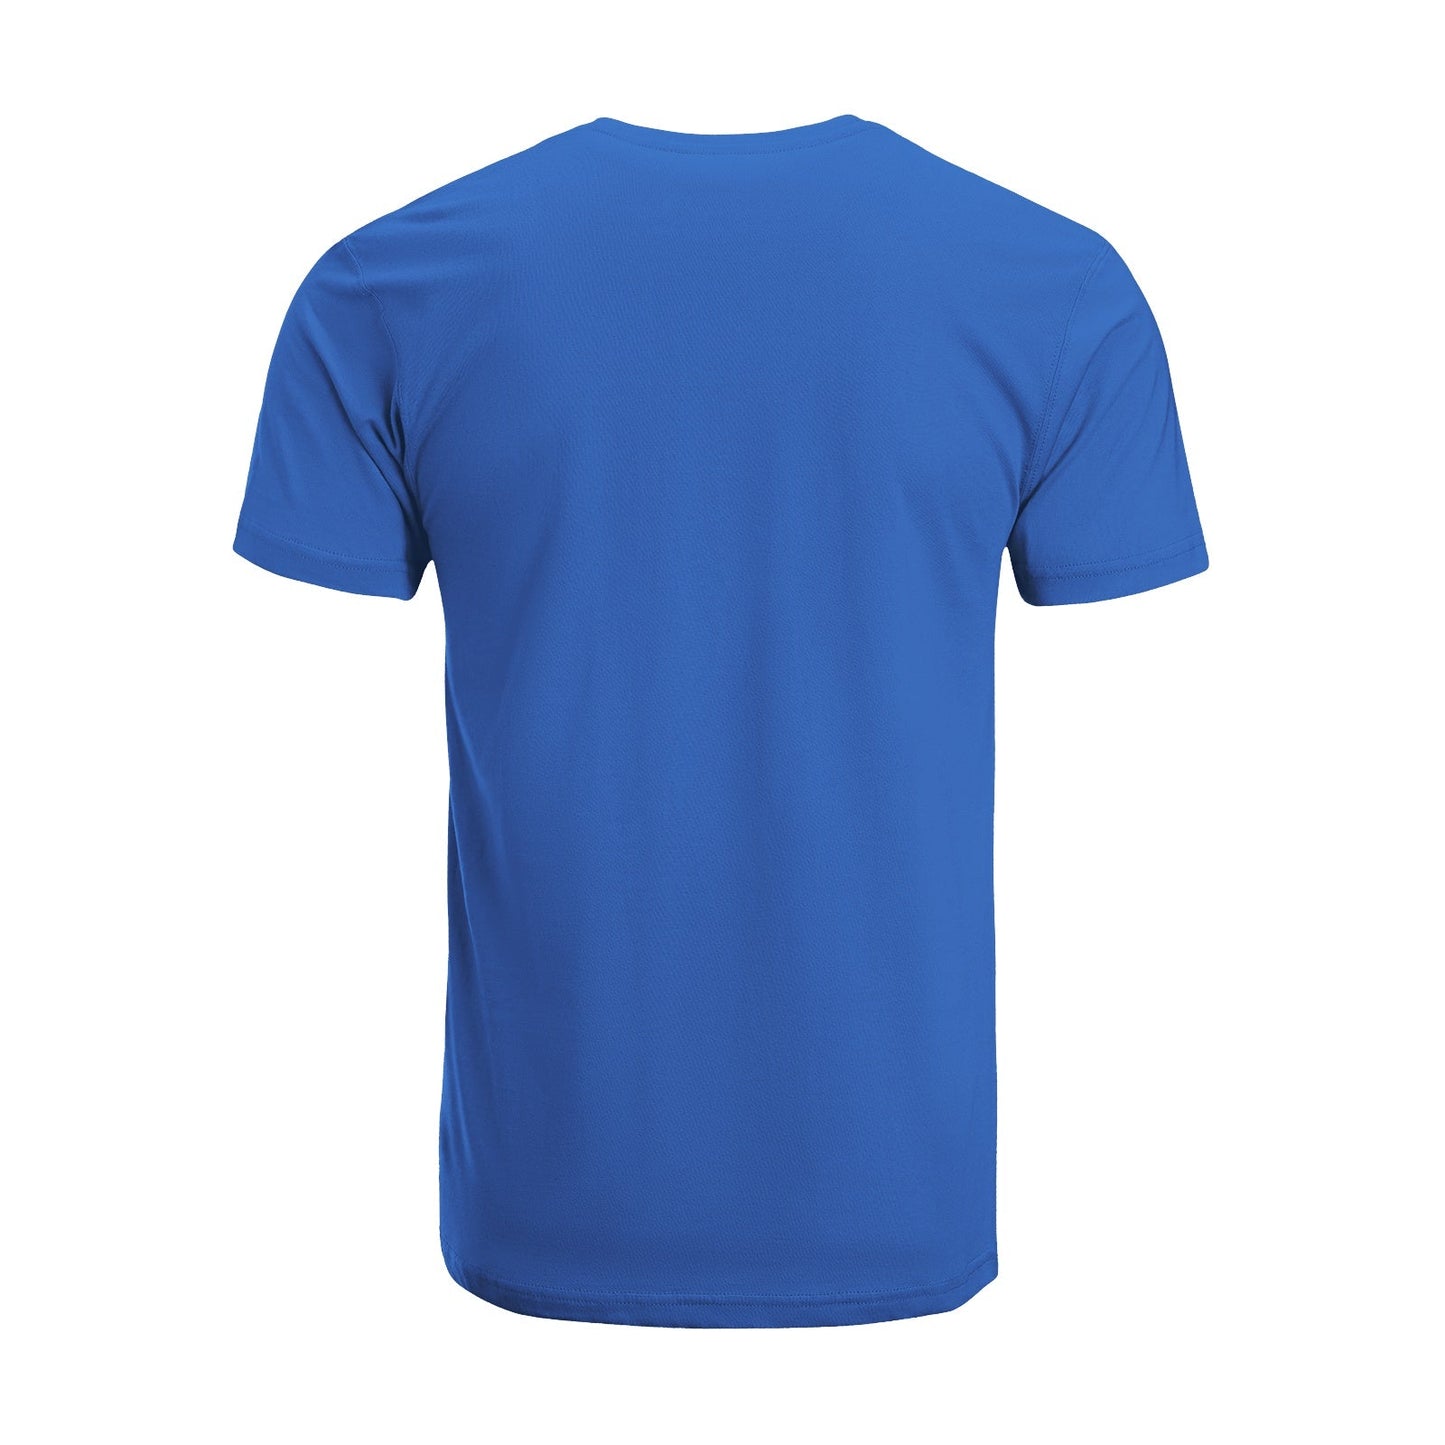 Unisex Short Sleeve Crew Neck Cotton Jersey T-Shirt MOM 24